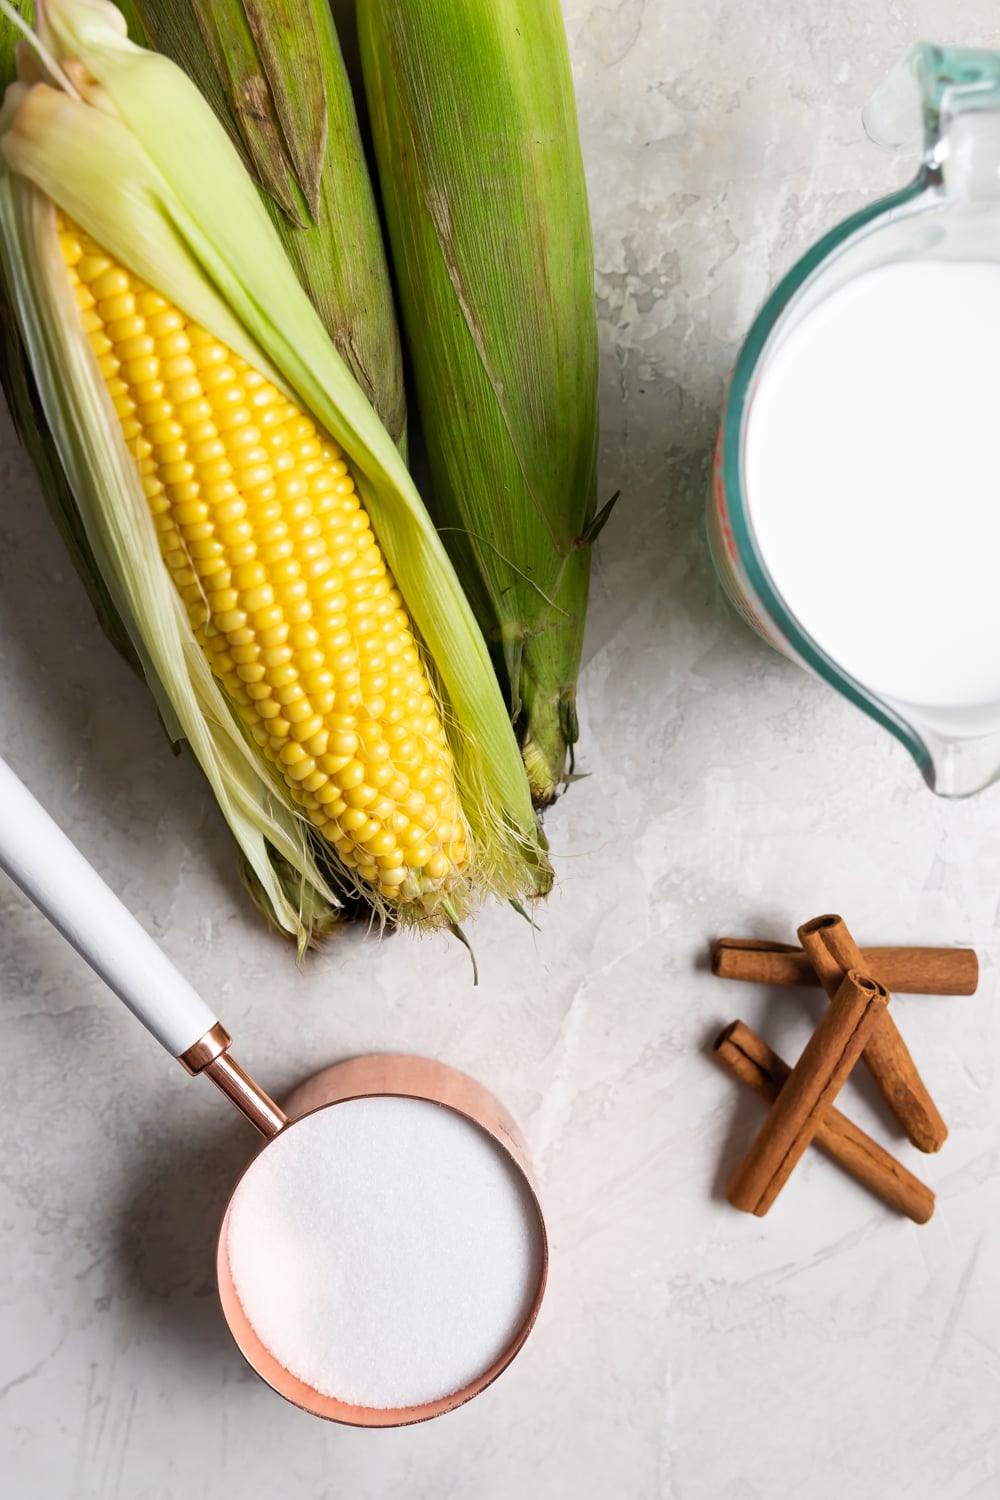 the milk, corn, cinnamon, and sugar are the ingredients for majarete